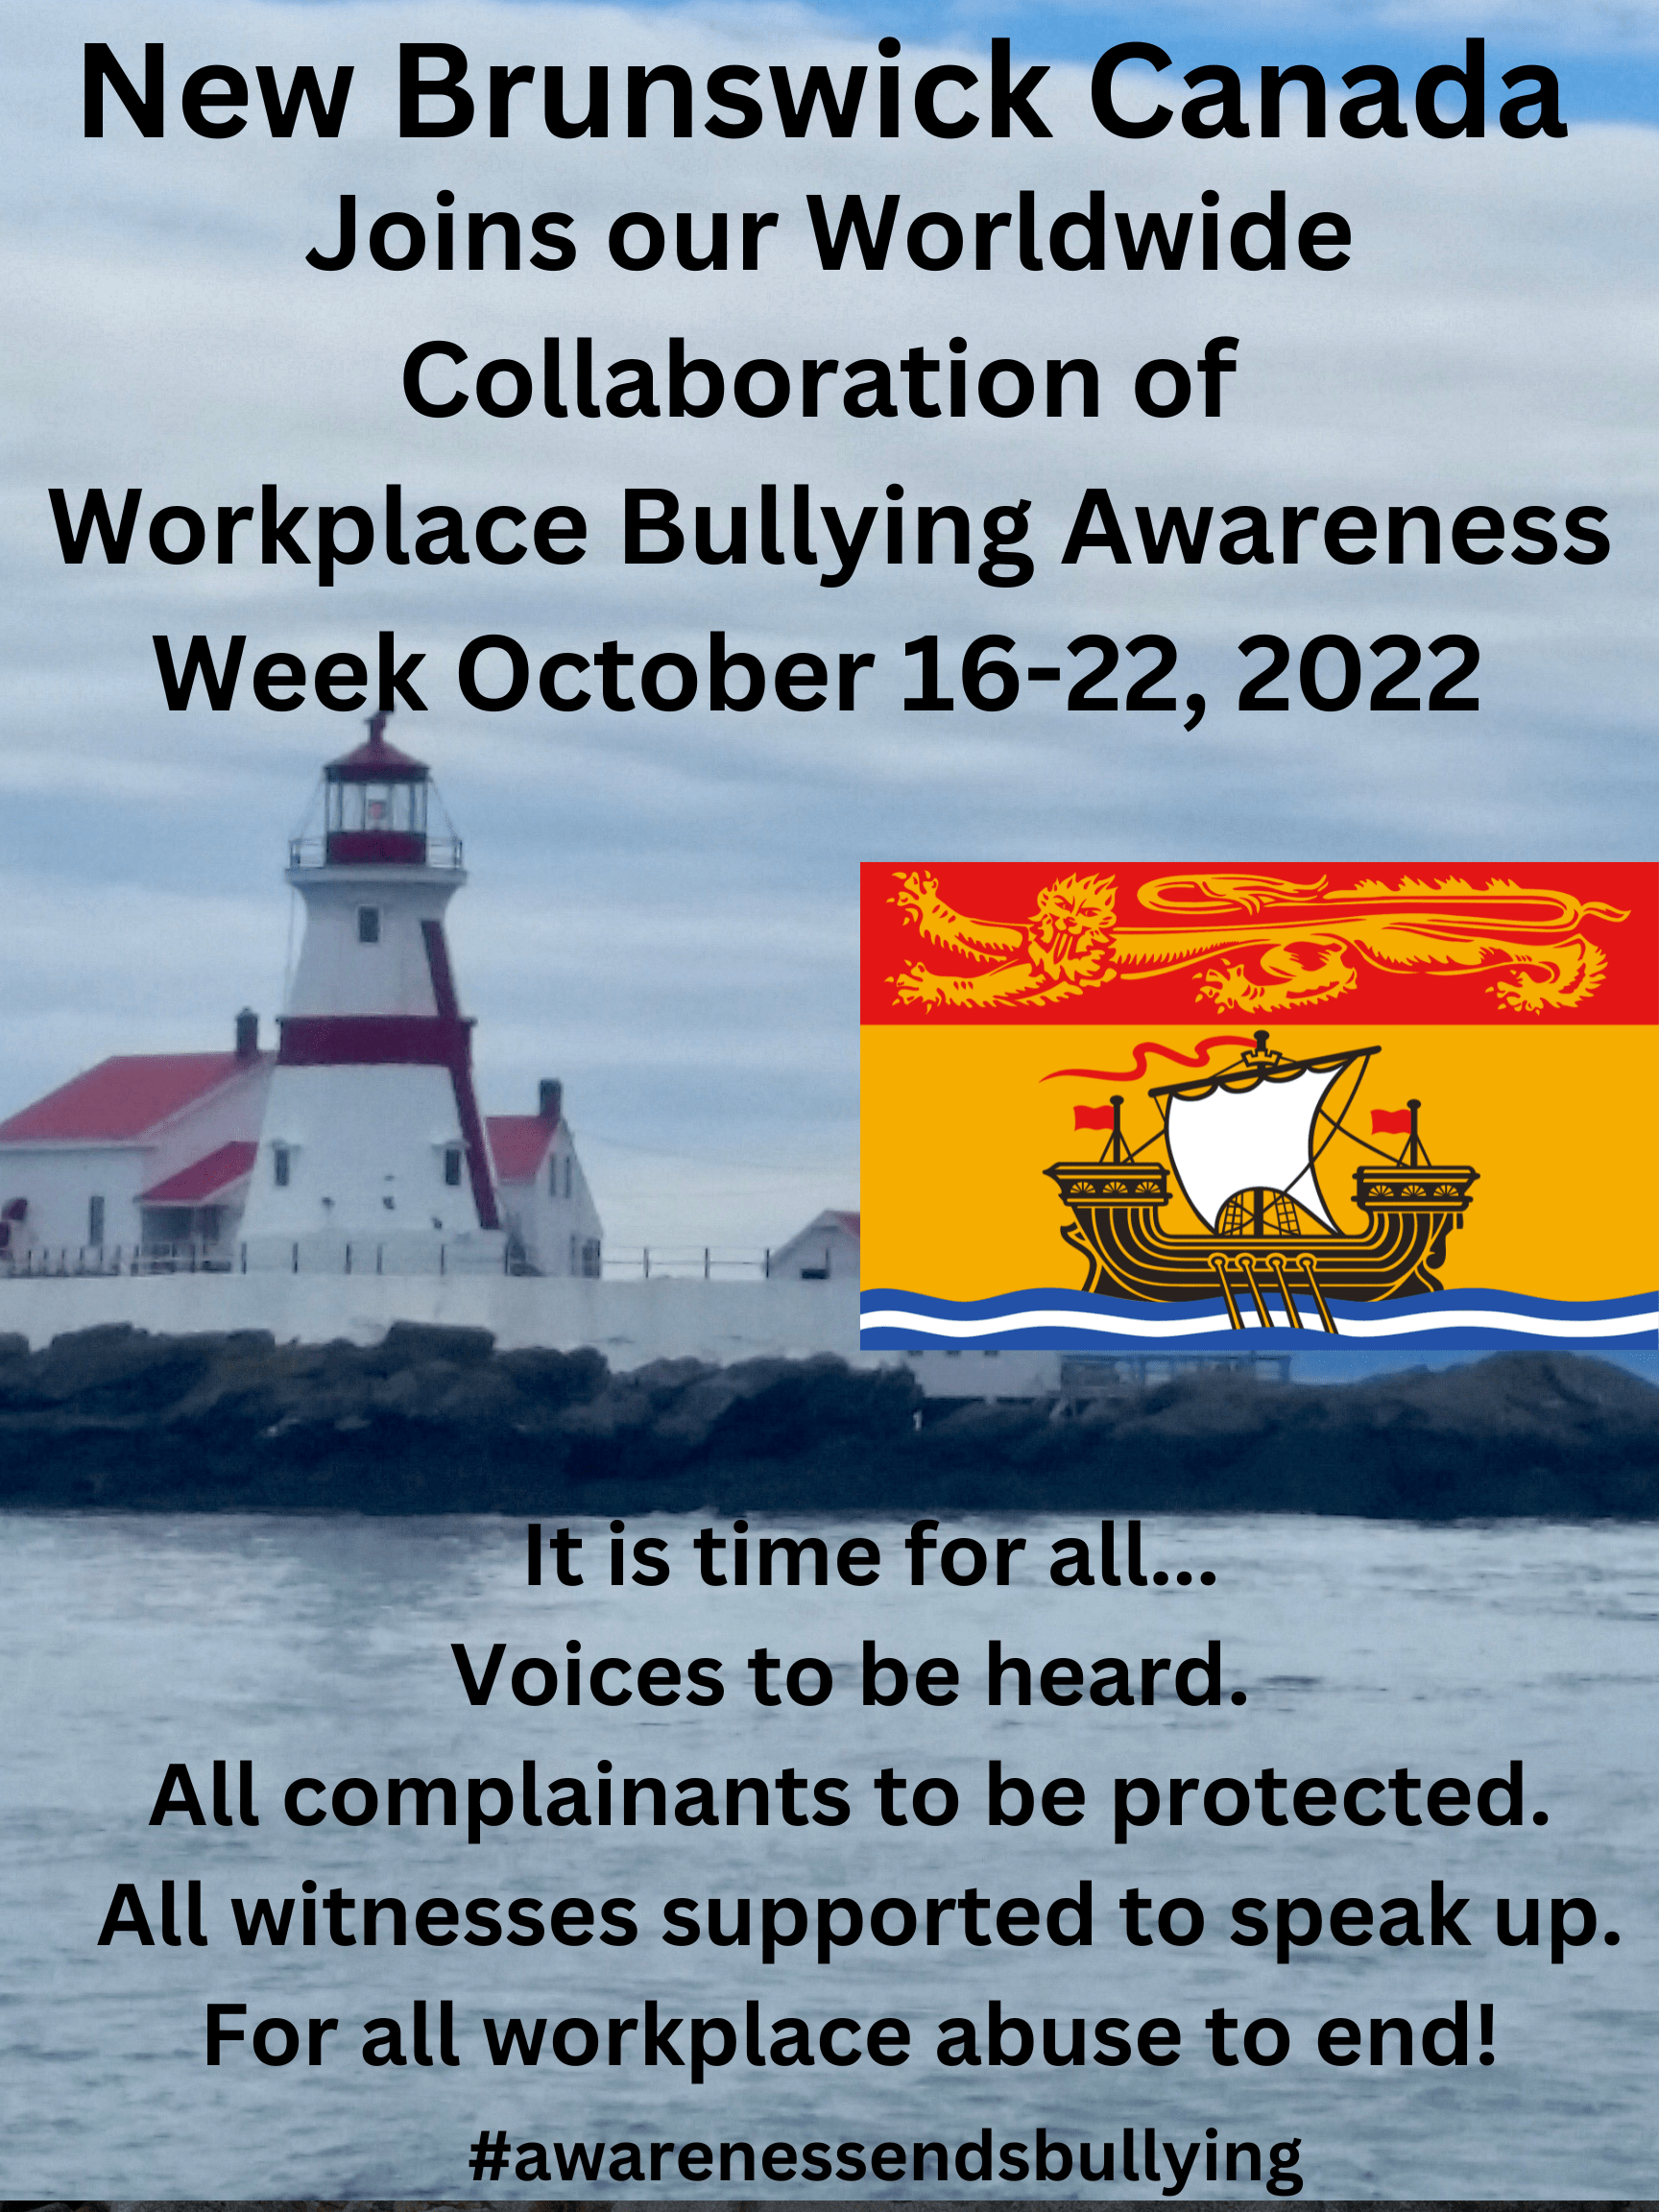 Workplace Bullying Awareness Week 2022, New Brunswick